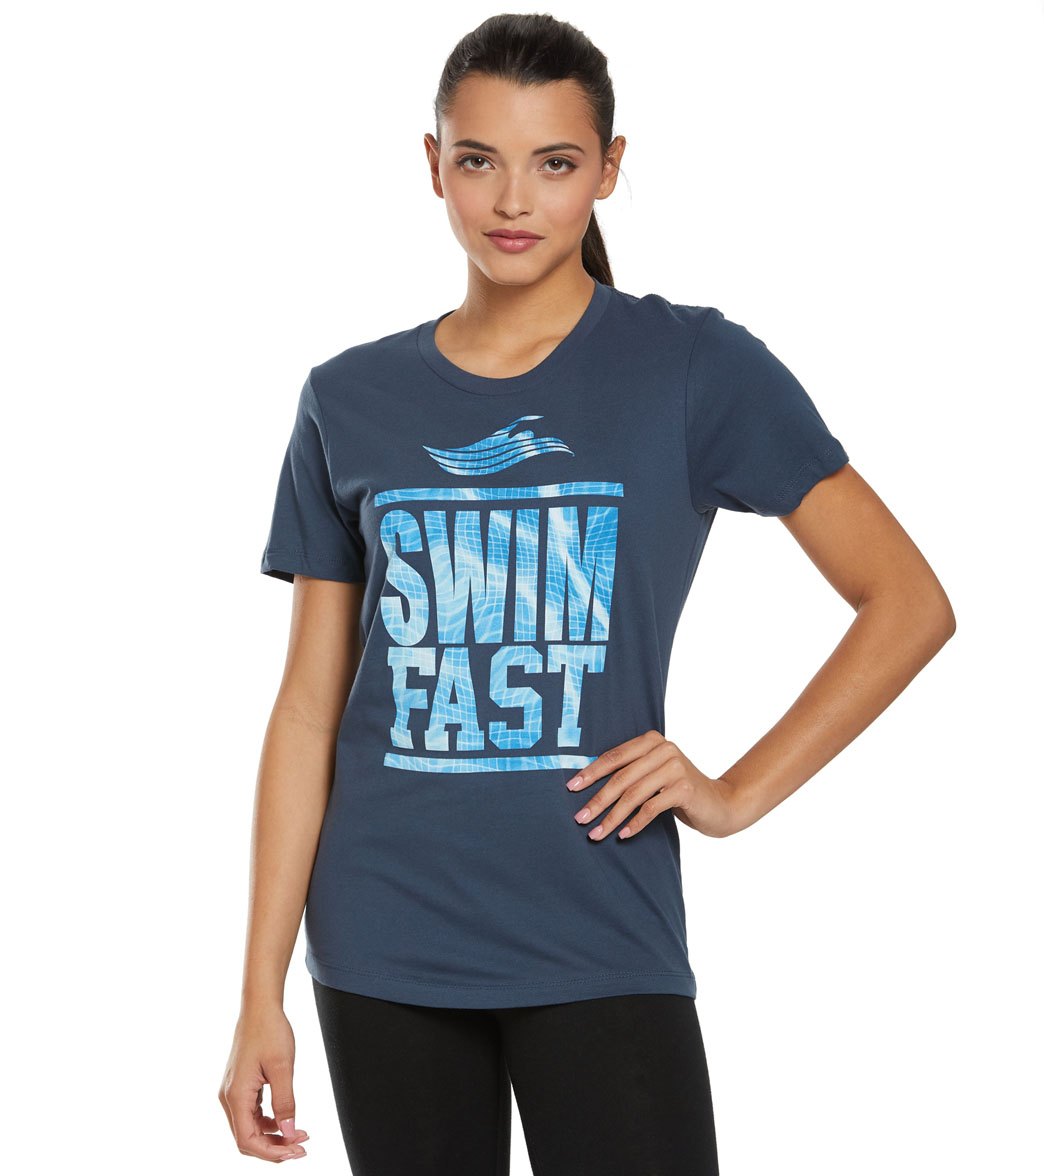 U.s. Masters Swimming Usms Women's Swim Fast Crew Neck T-Shirt - Navy Medium Cotton - Swimoutlet.com